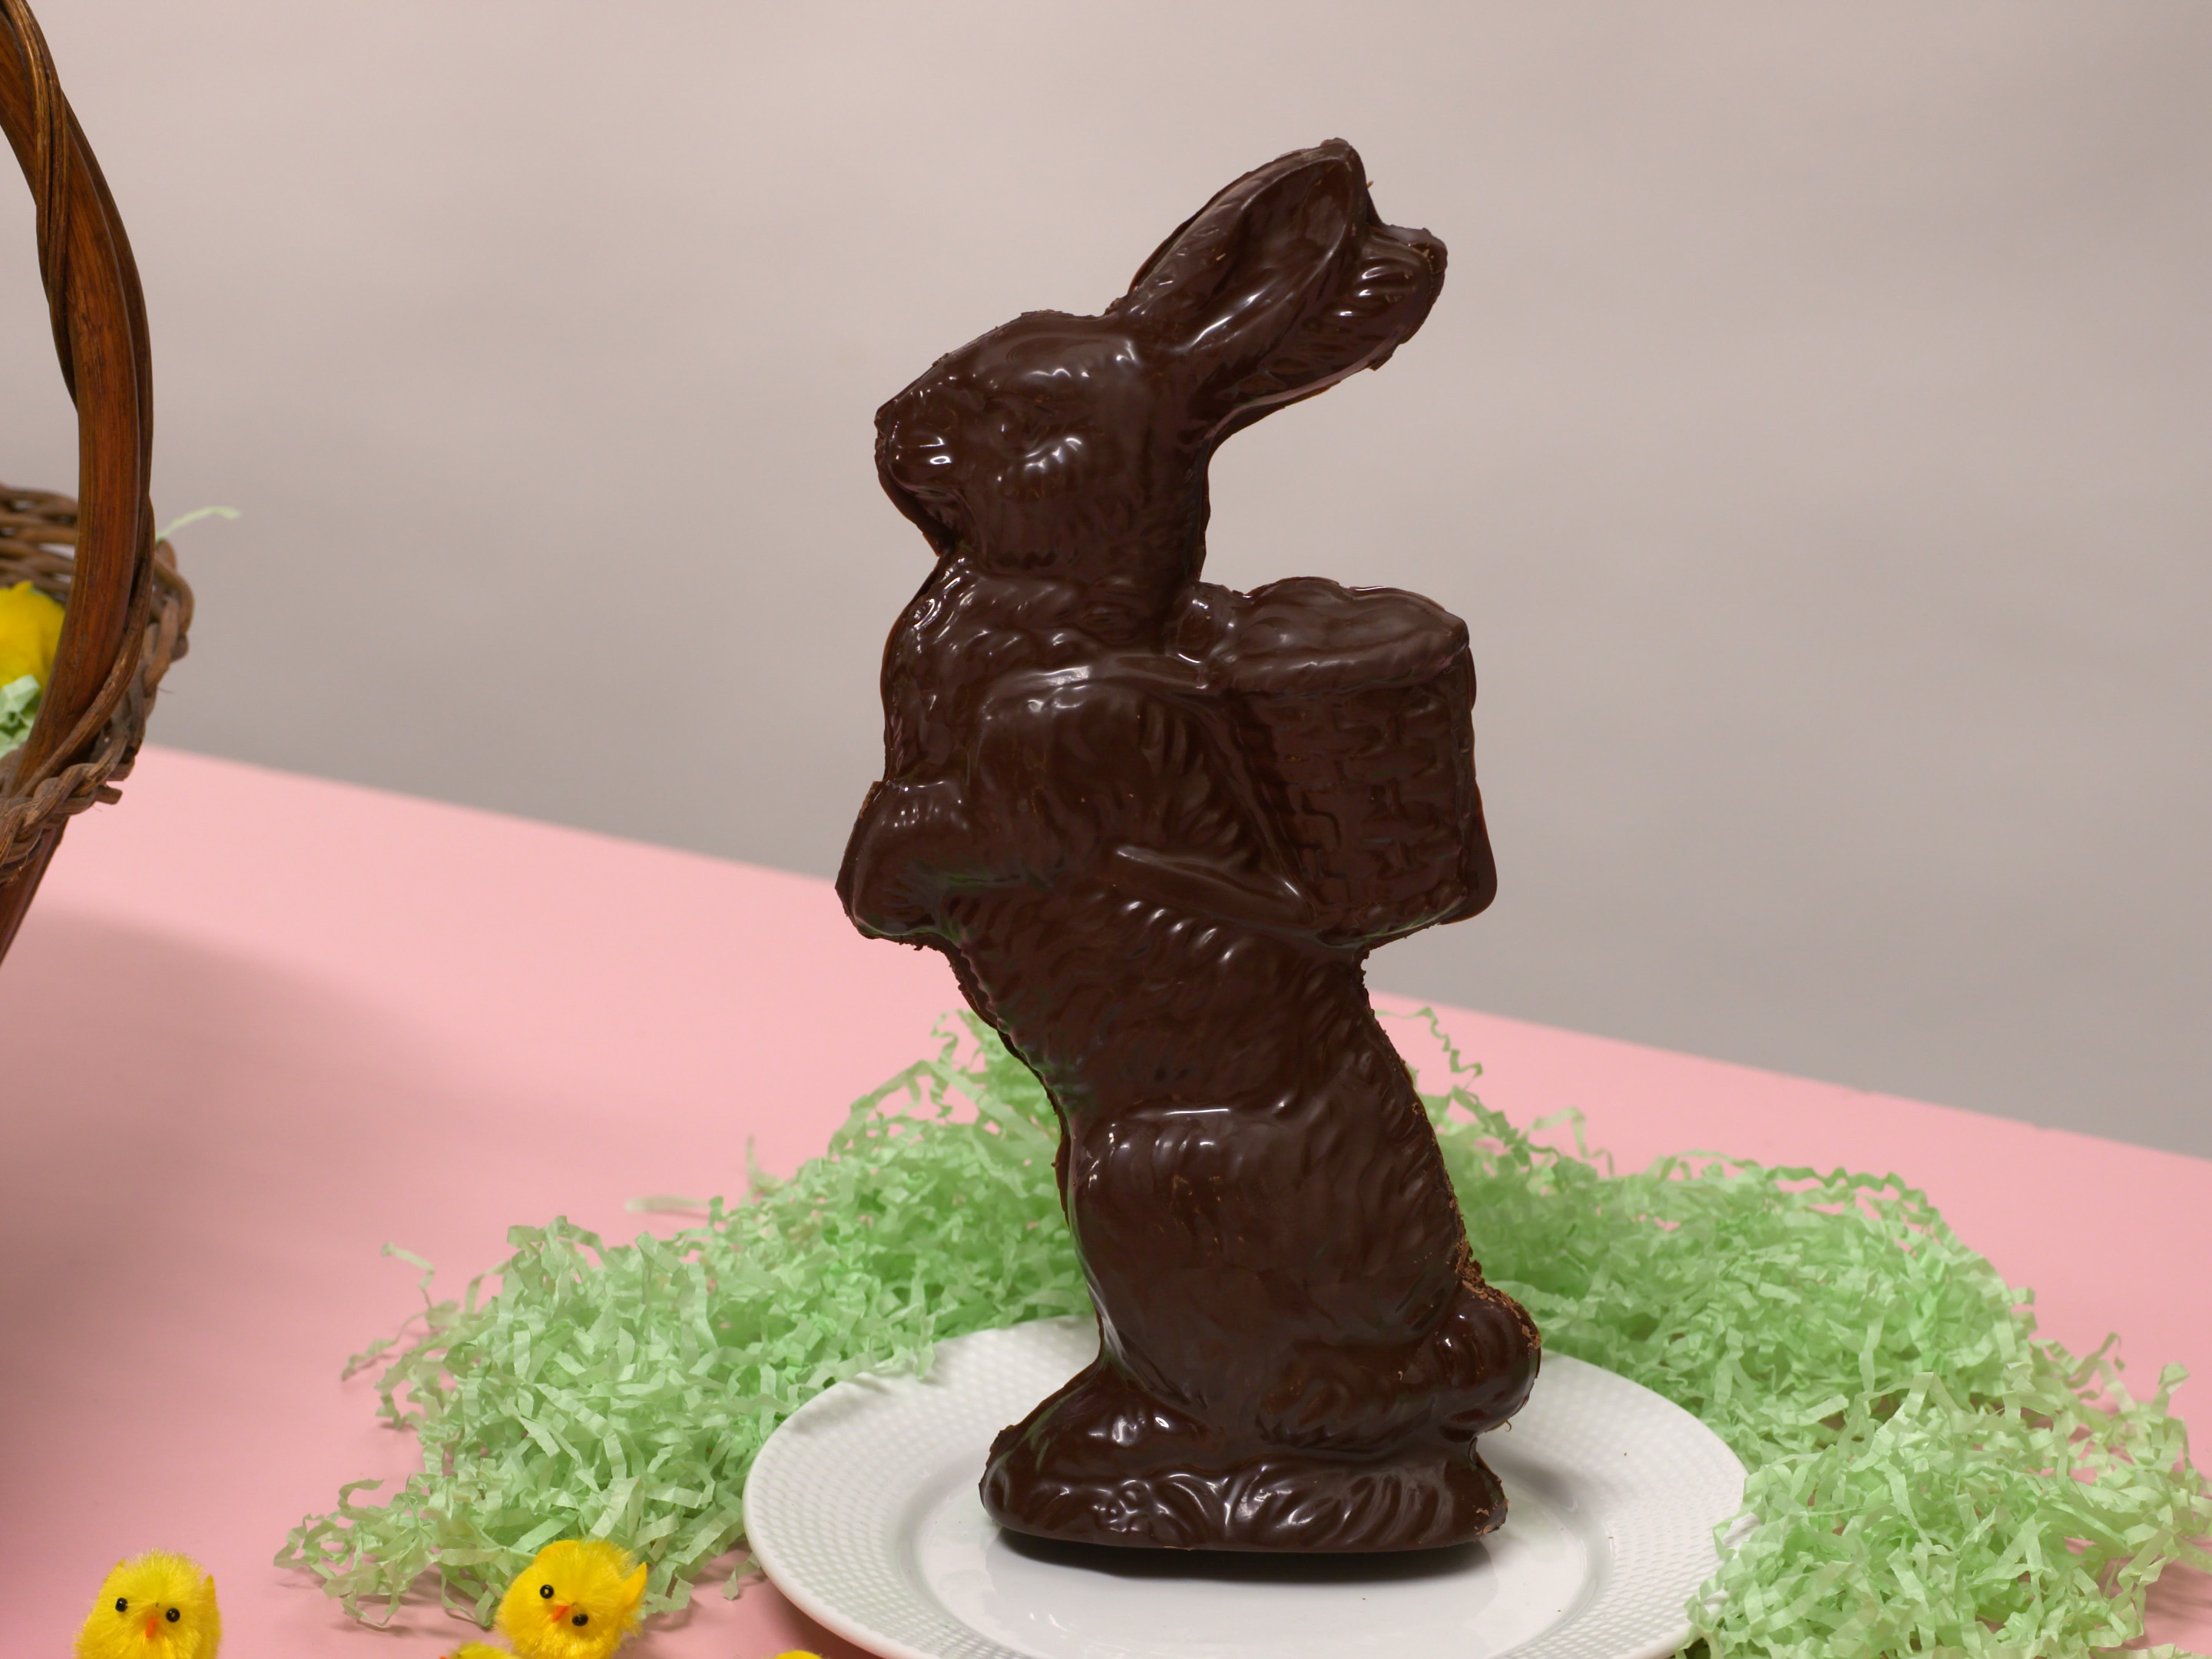 https://www.foodnetwork.com/content/dam/images/food/fullset/2019/4/1/0/FNK_Filled-Chocolate-Easter-Bunny_s4x3.jpg